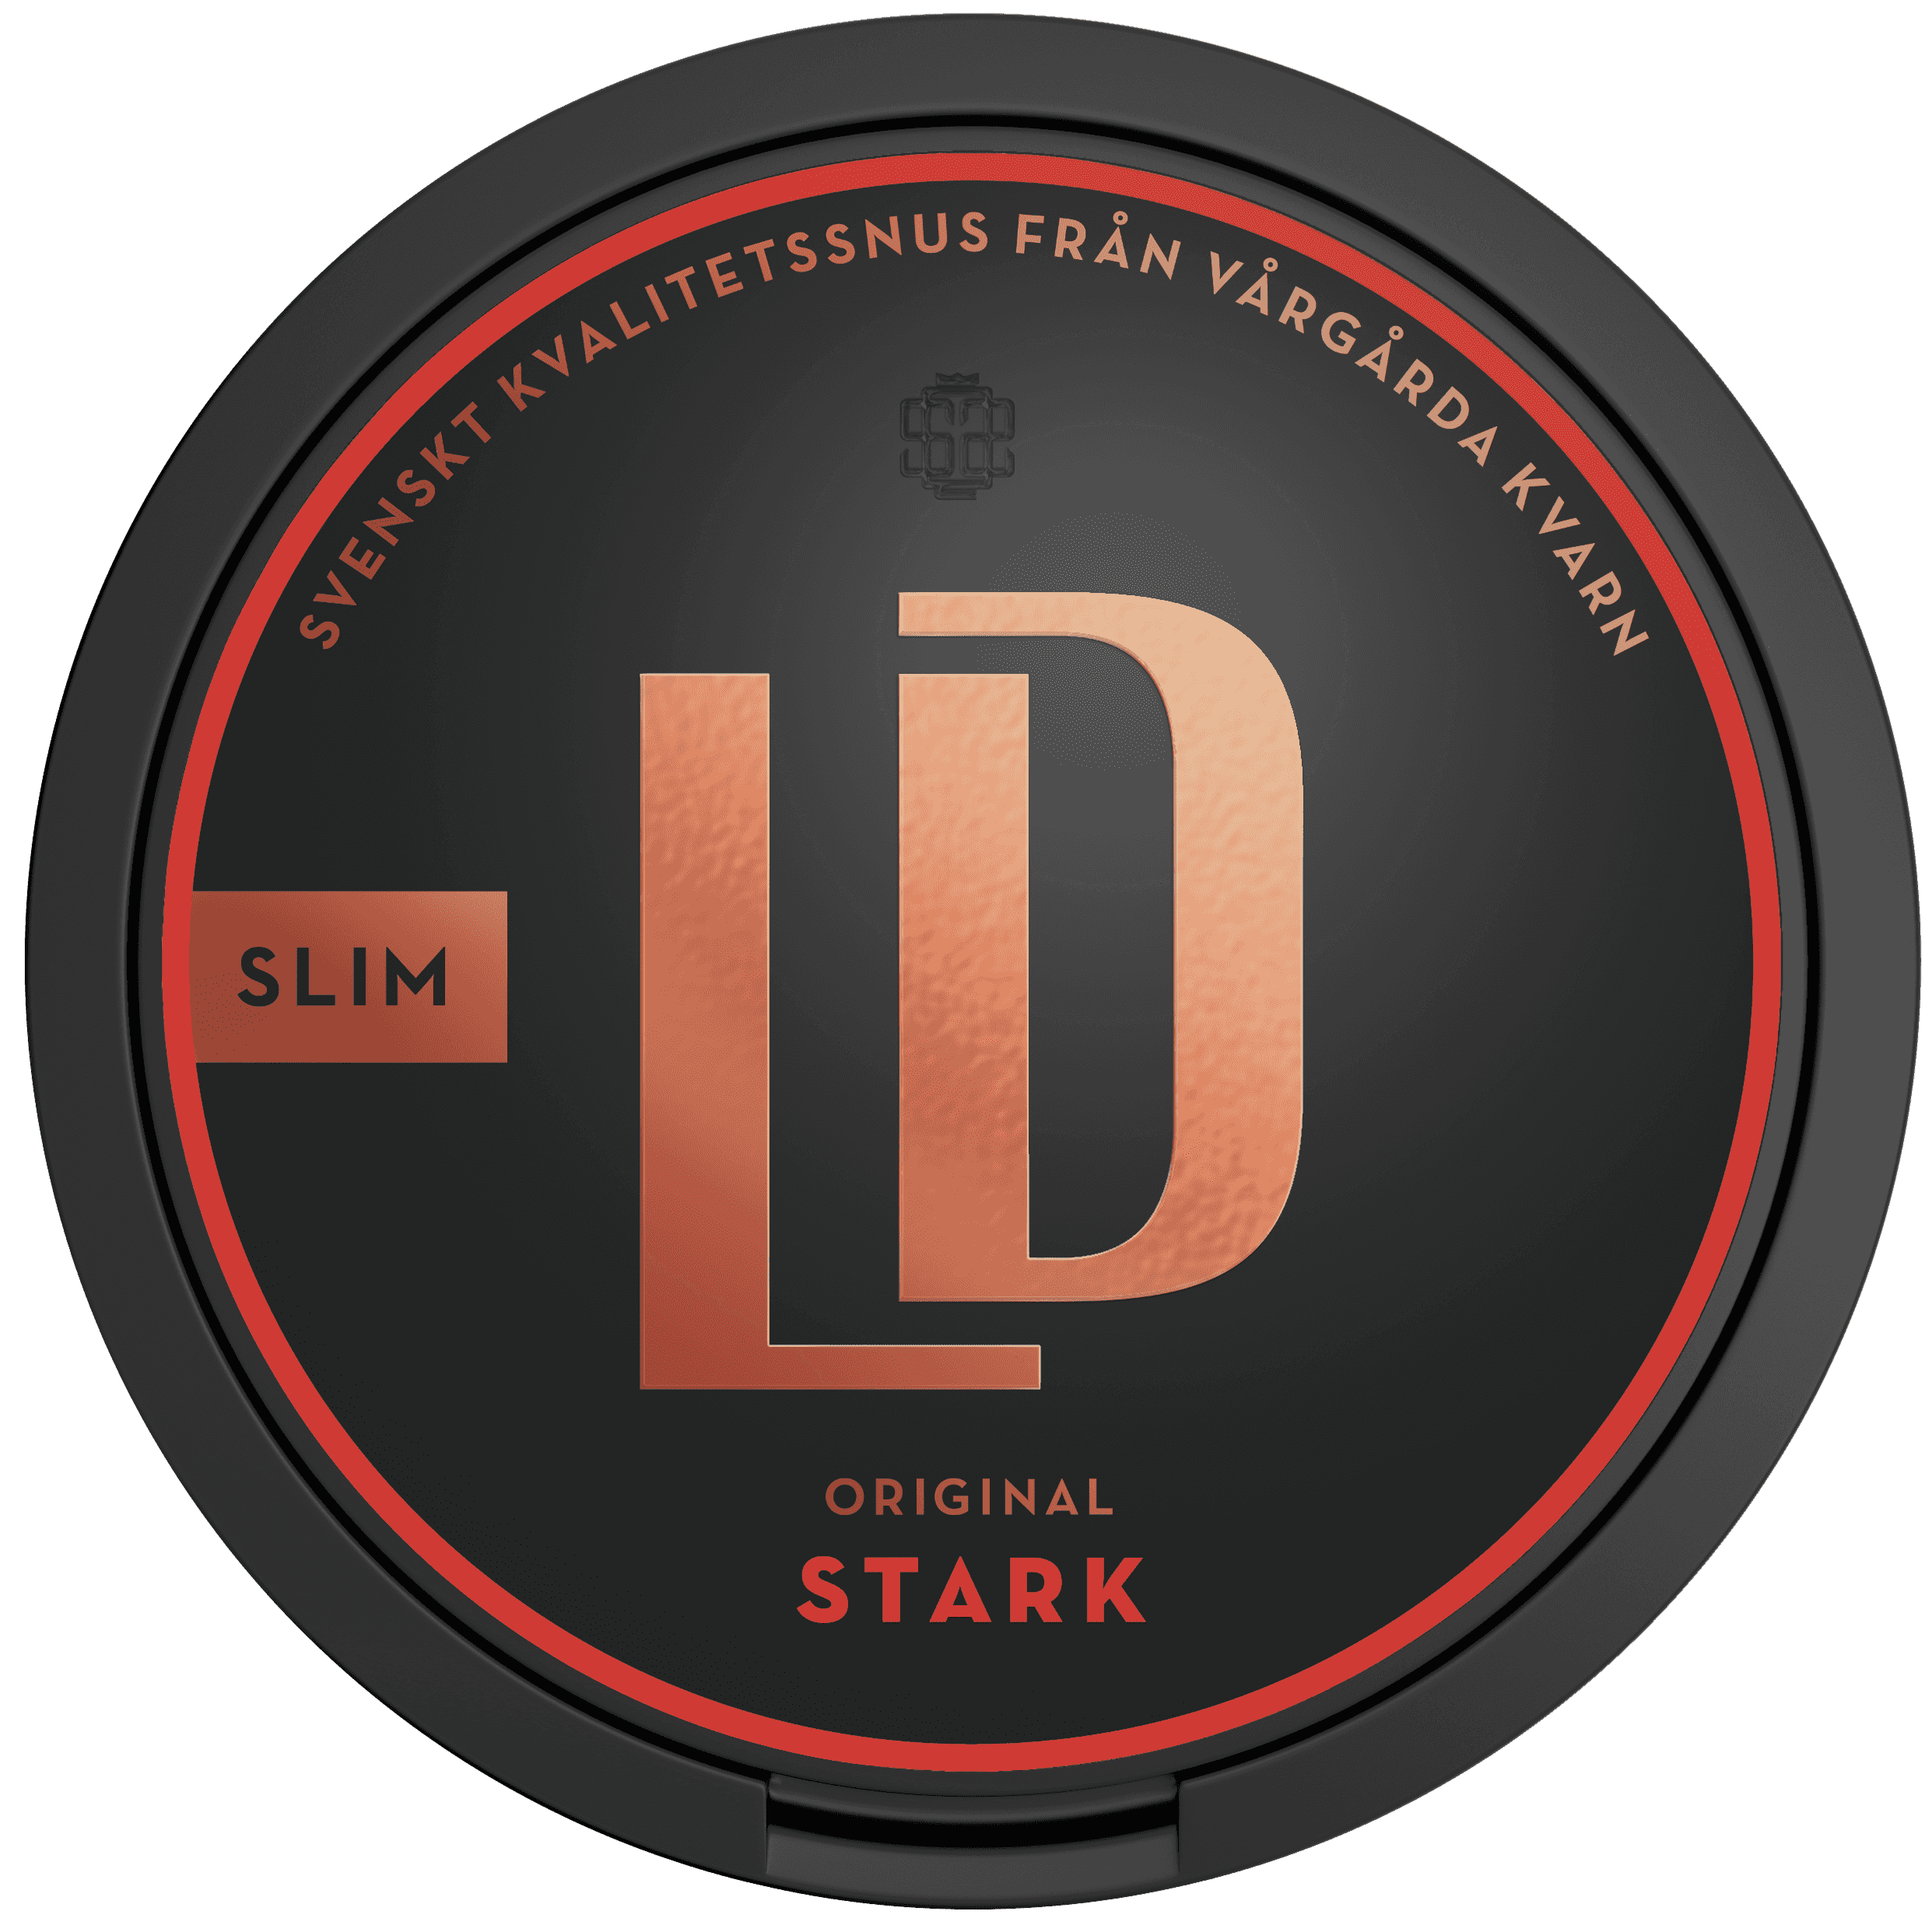 LD Slim Original Stark Portion